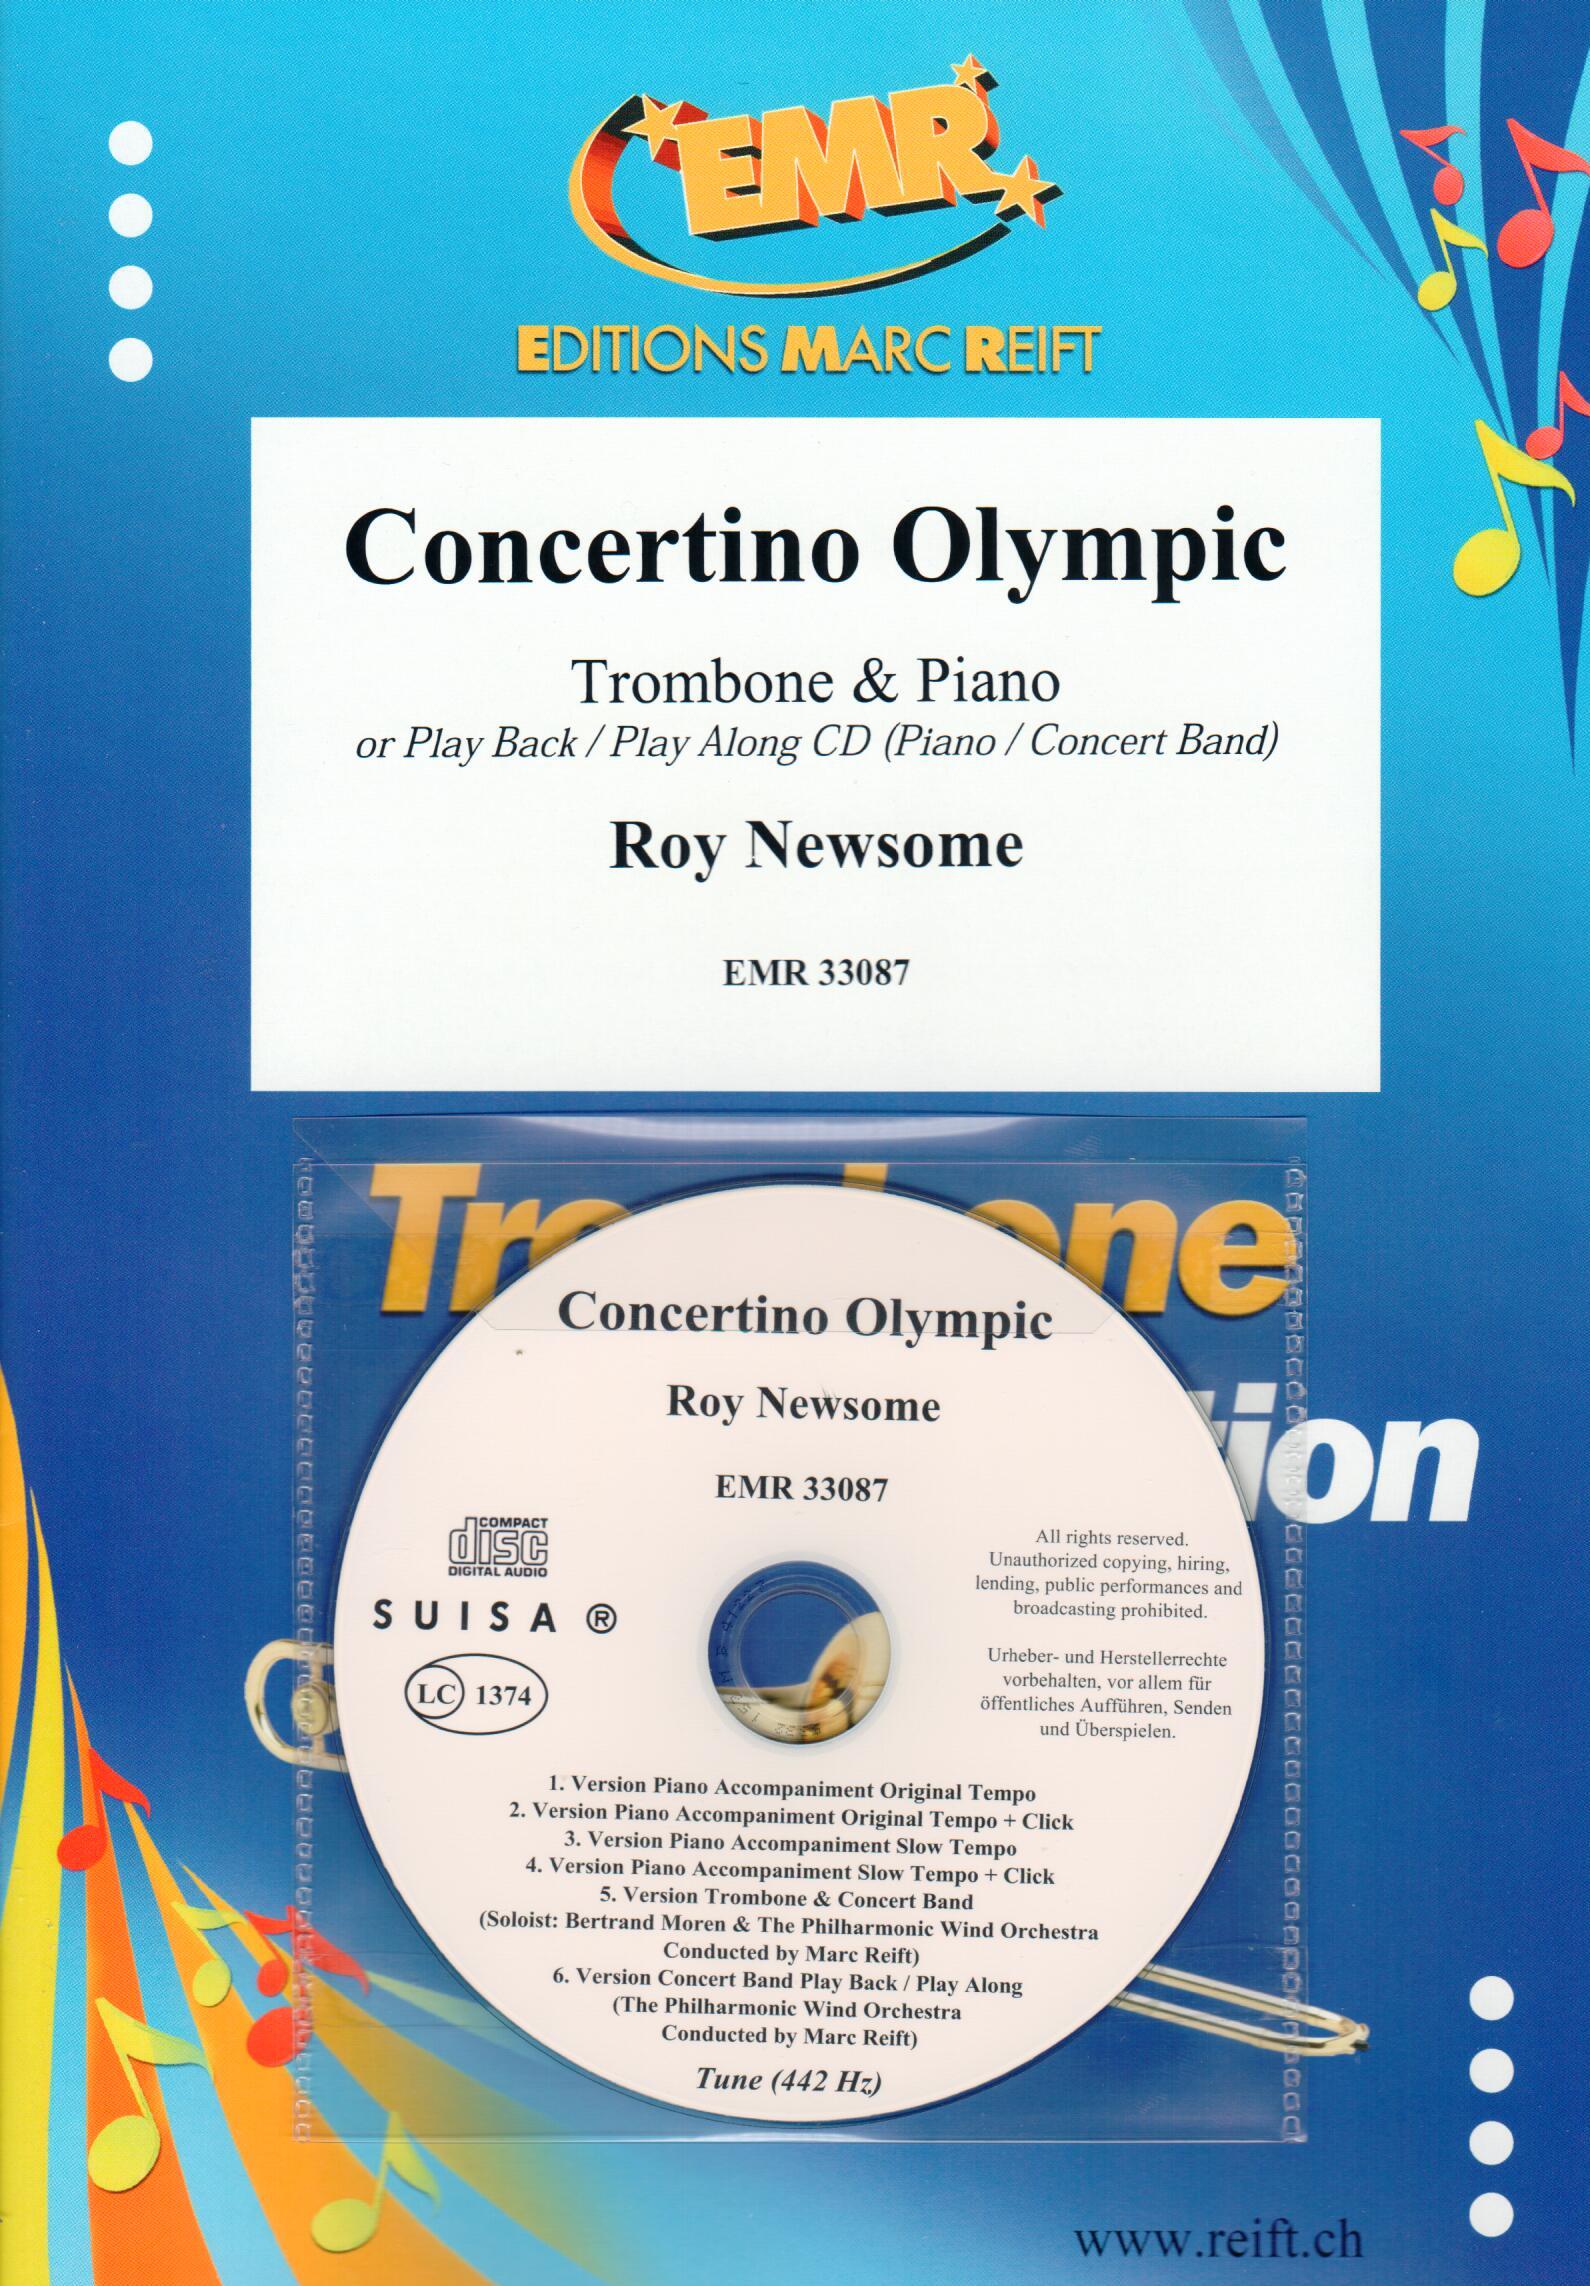 CONCERTINO OLYMPIC, SOLOS - Trombone